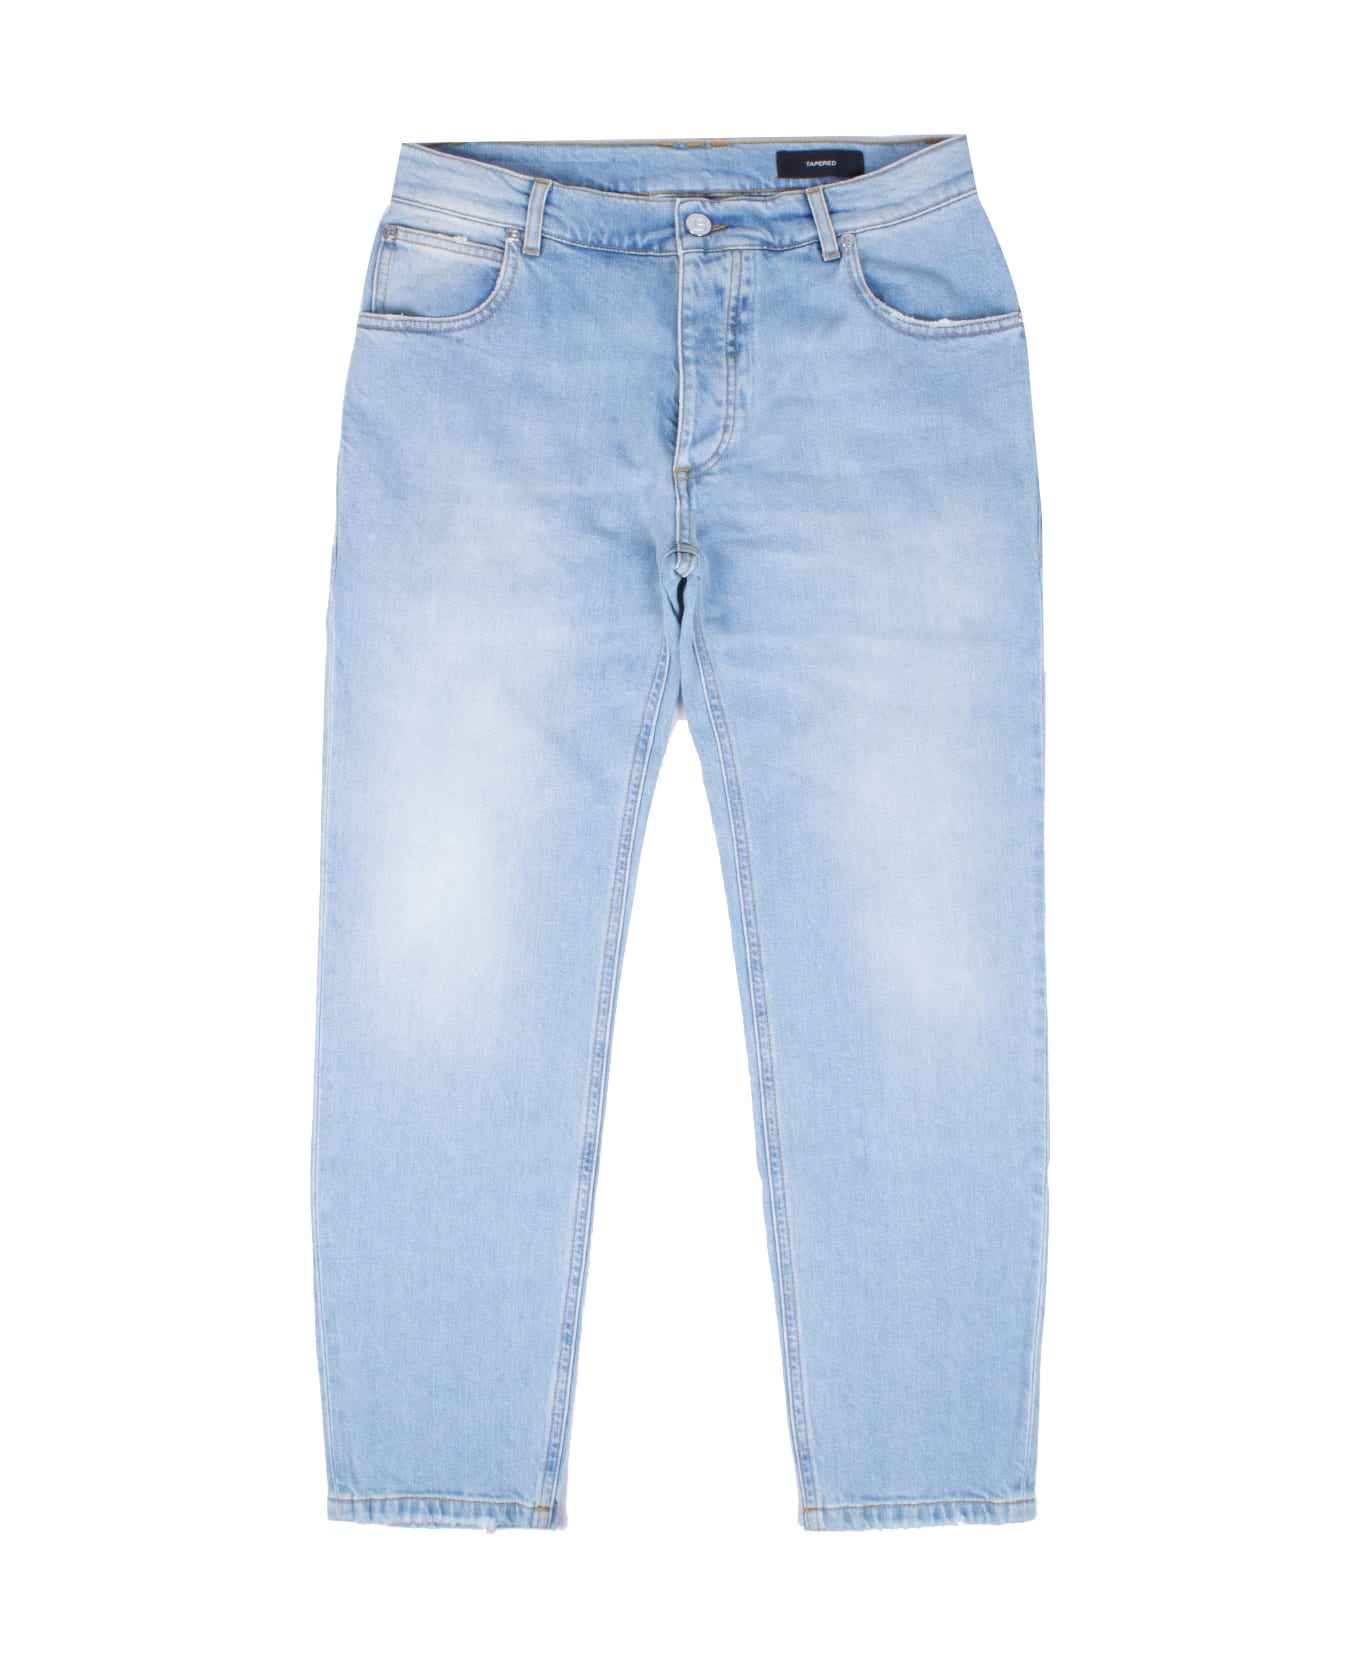 Balmain Jeans - Light blue デニム